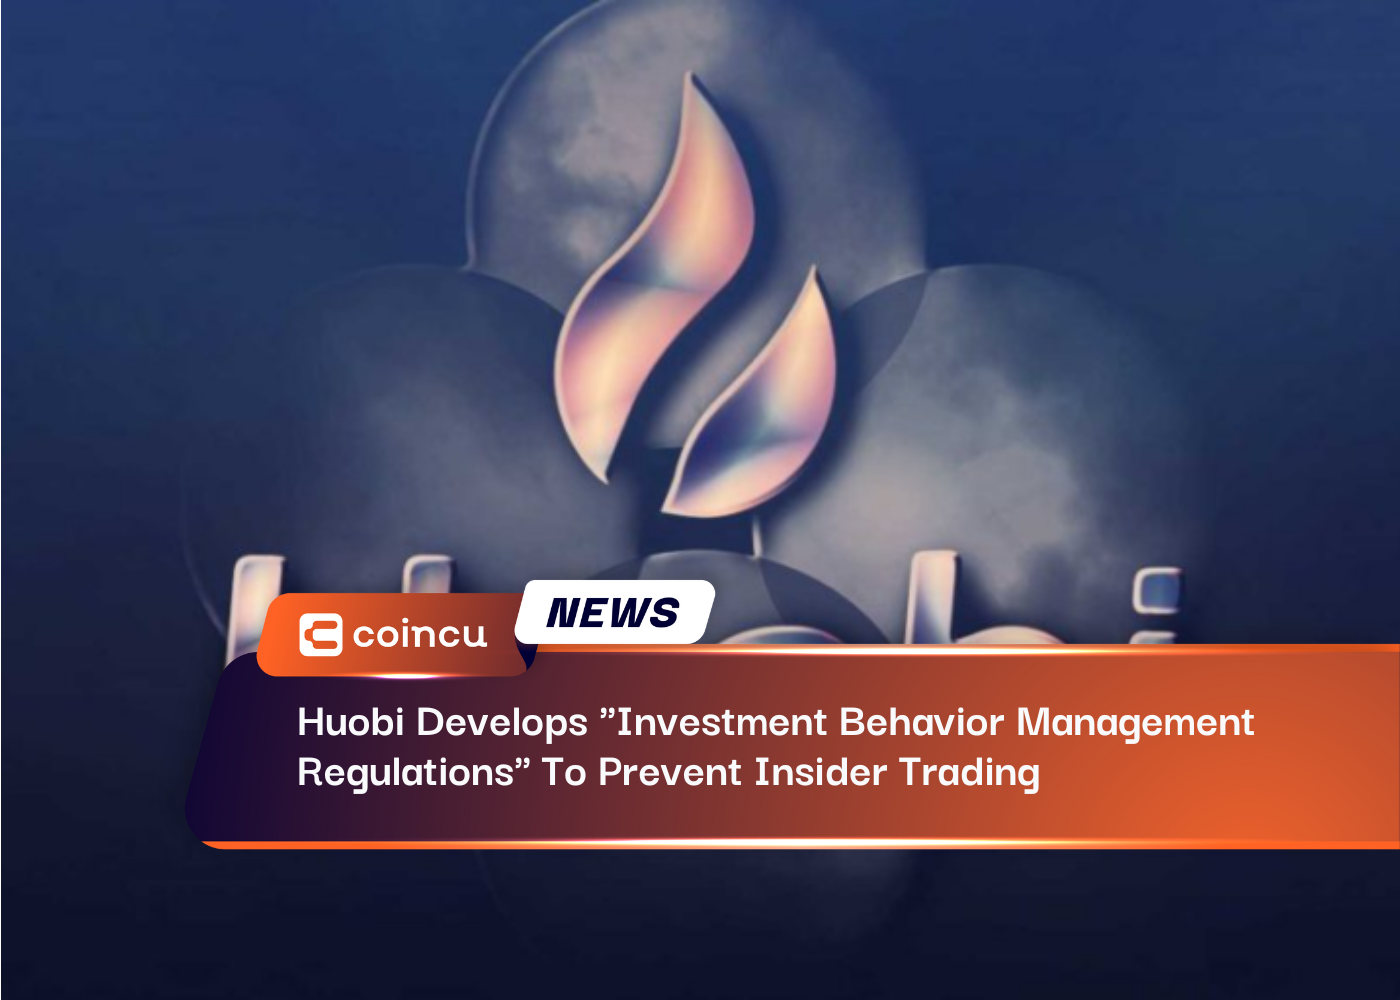 Huobi Develops "Investment Behavior Management Regulations" To Prevent Insider Trading